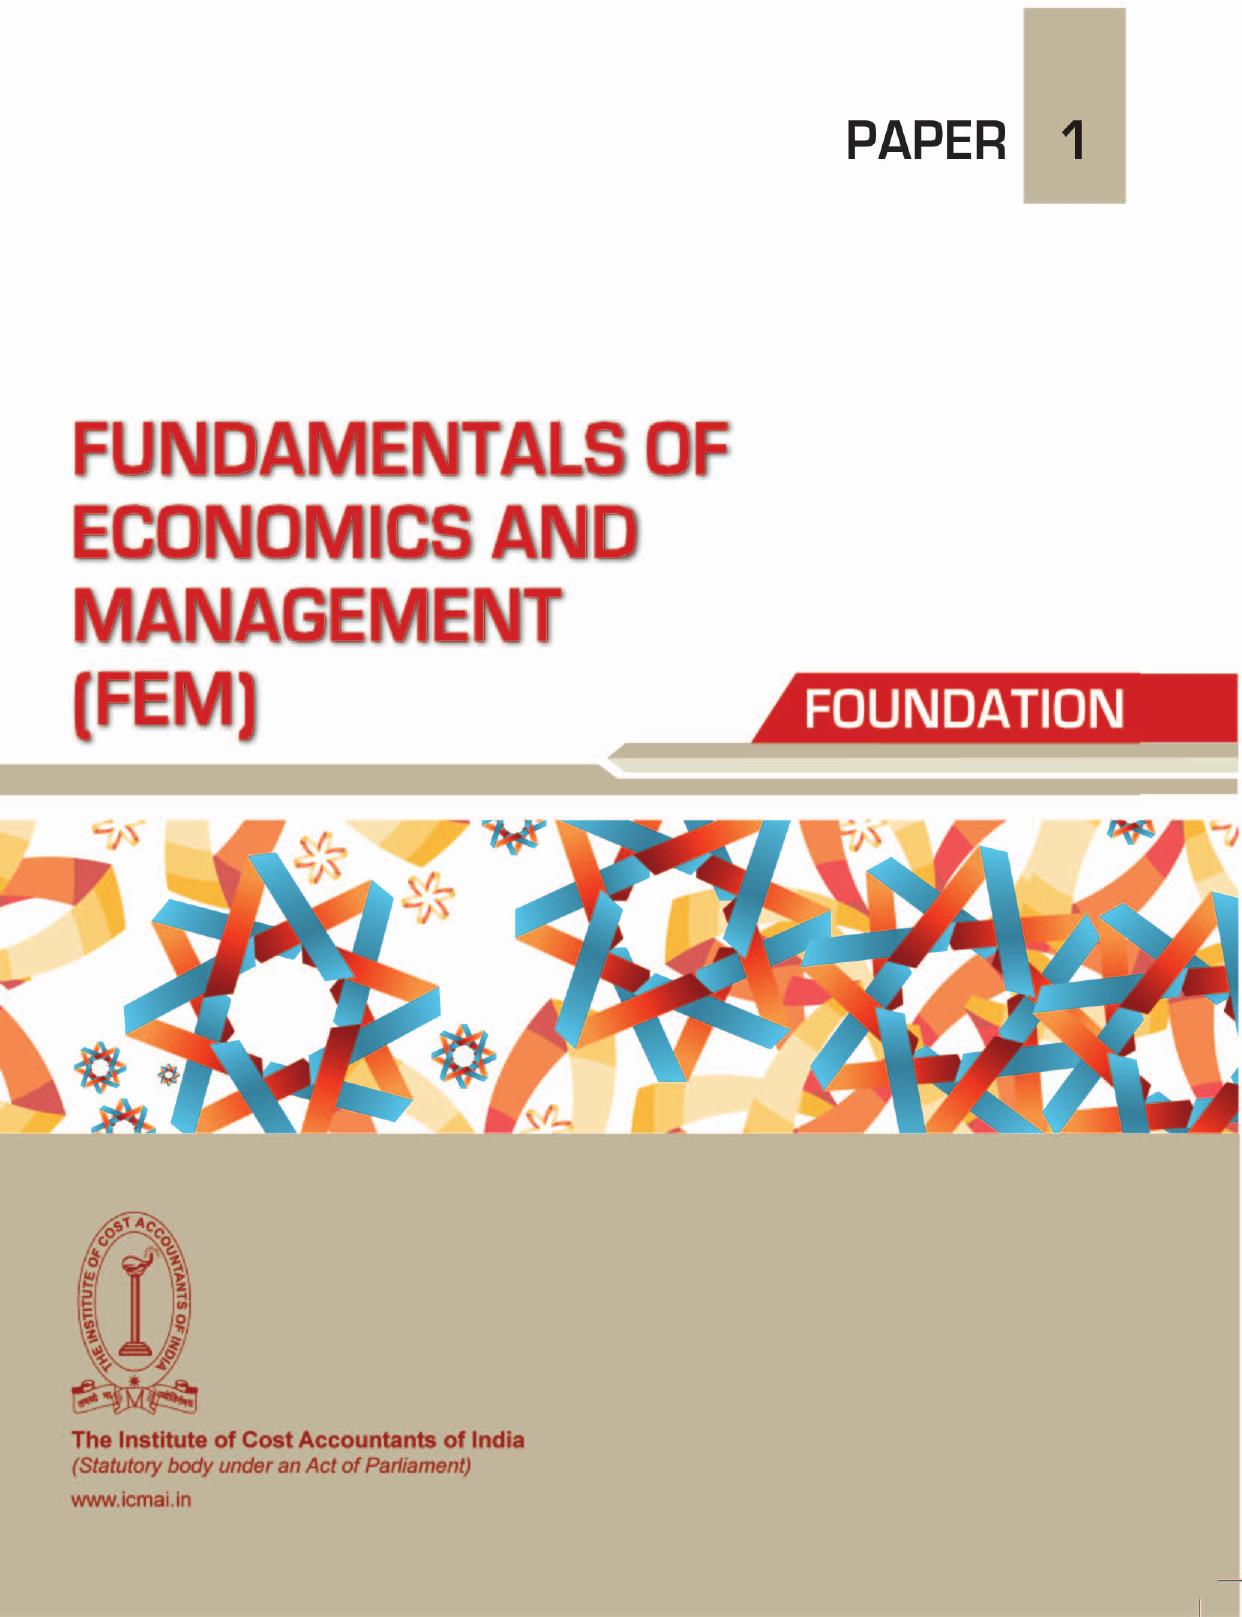 Fundamentals of Economic and Management Foundation 2014